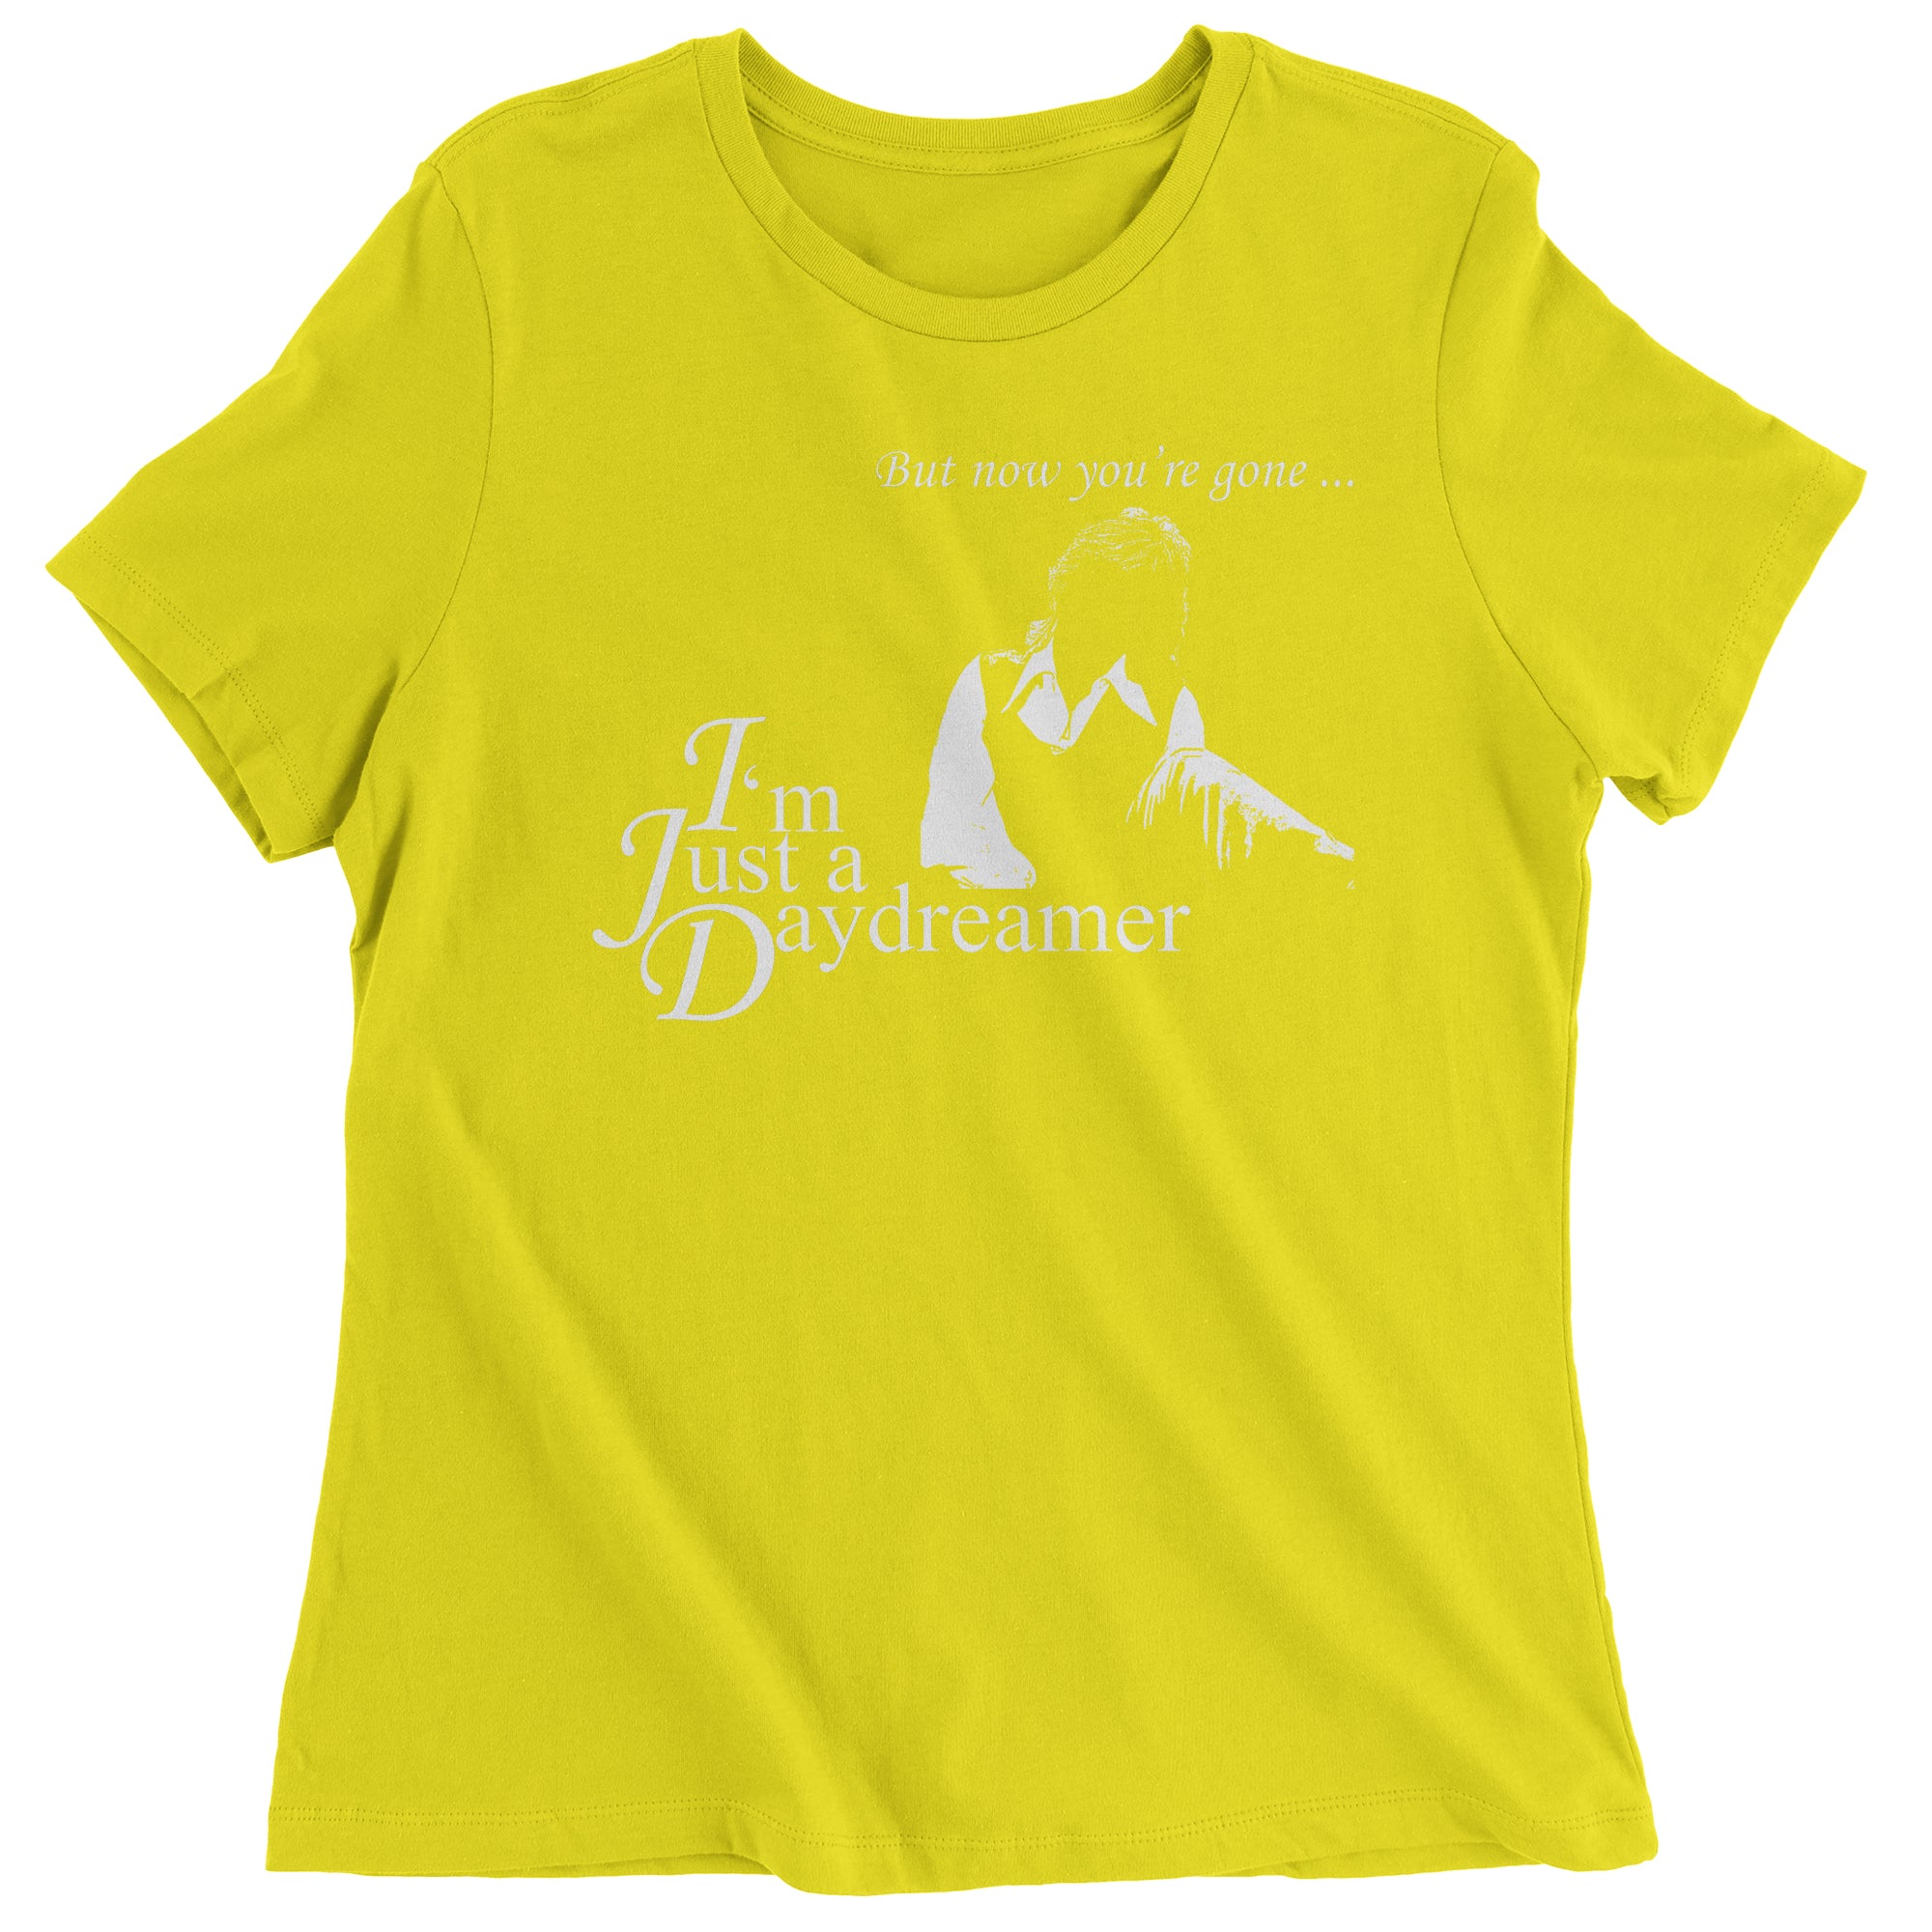 Cassidy Daydreamer Tribute Women's T-Shirt